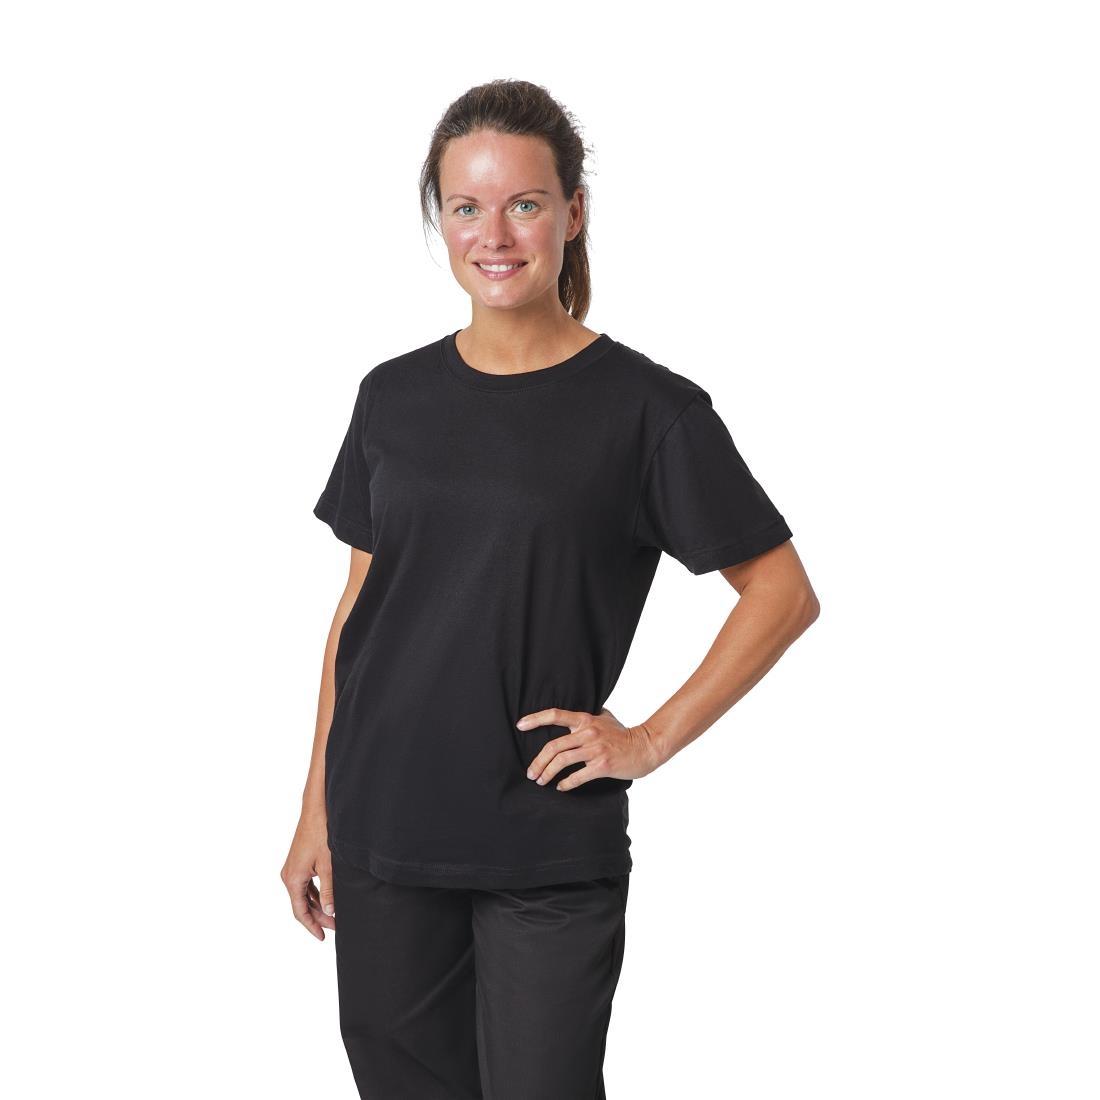 Unisex Chef T-Shirt Black 2XL - A295-2XL  - 3